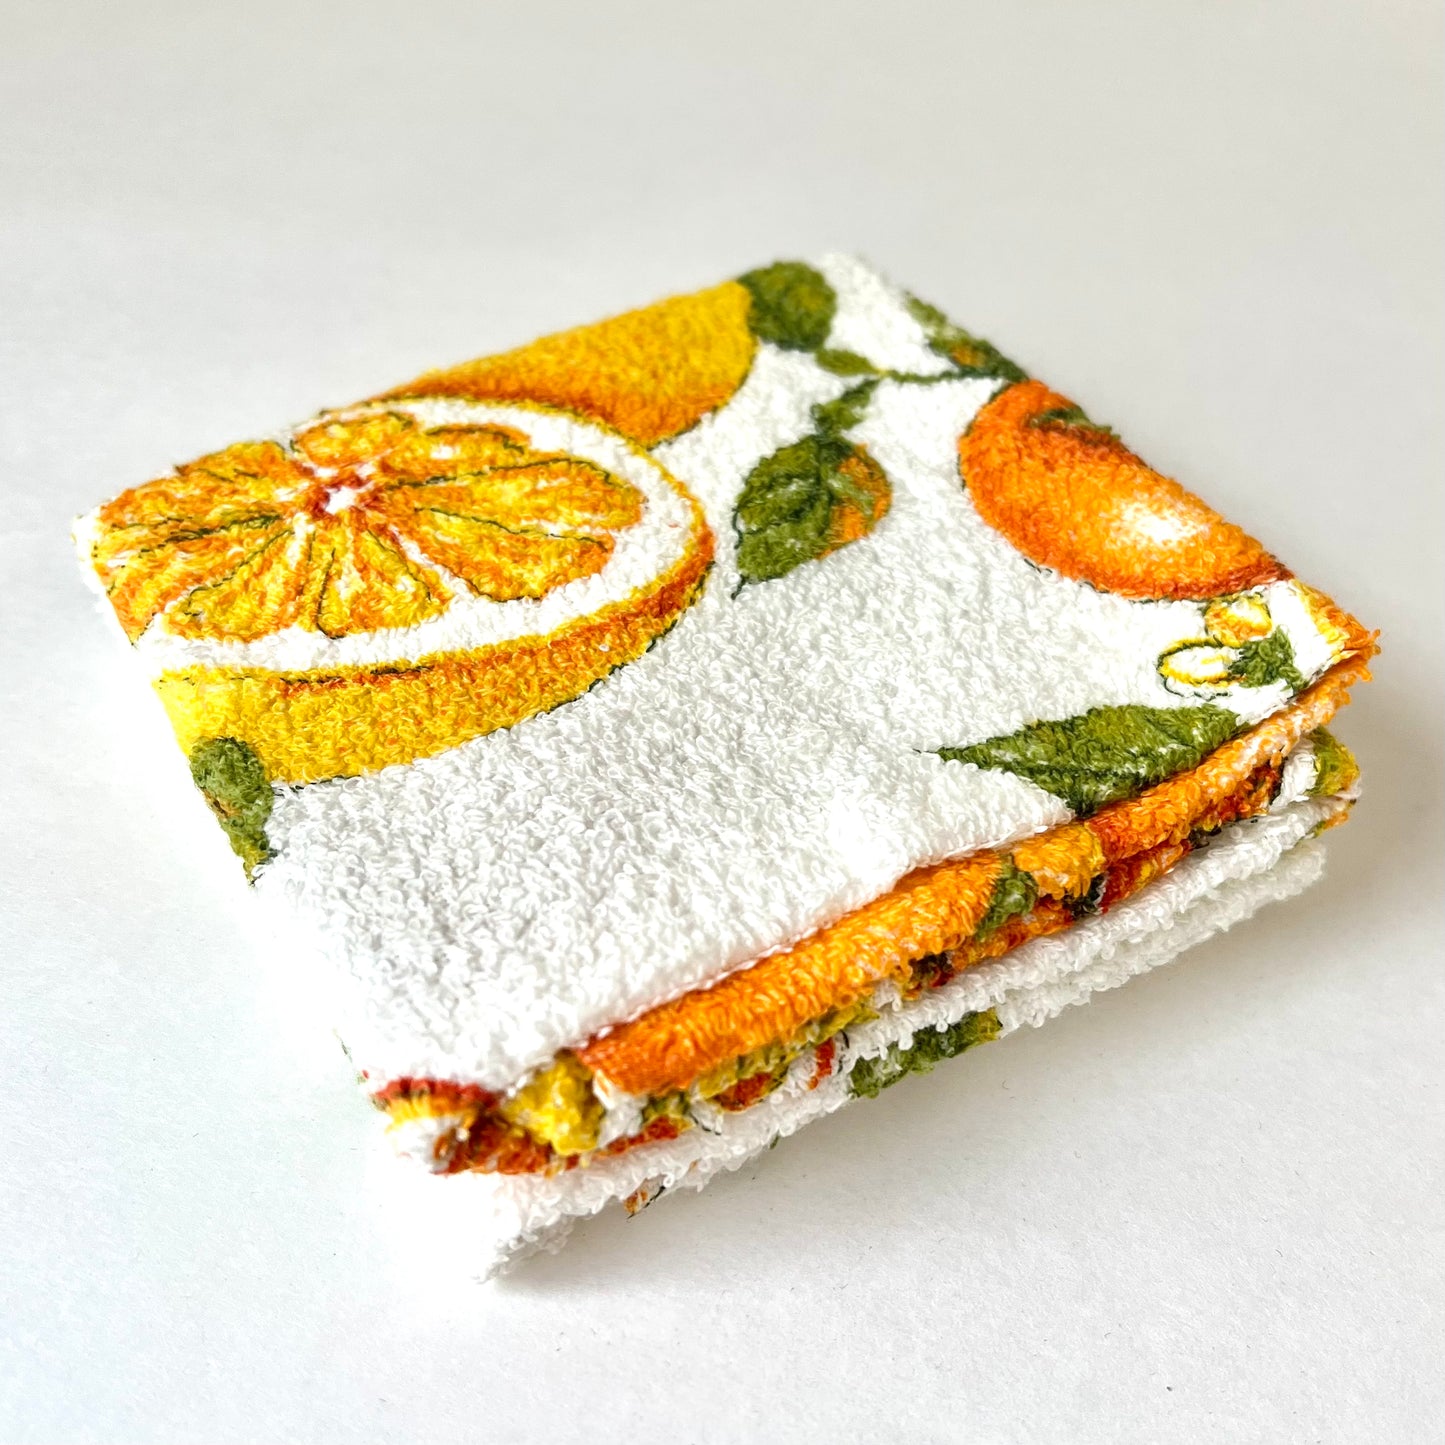 Tutti Fruity Toweling - Vintage